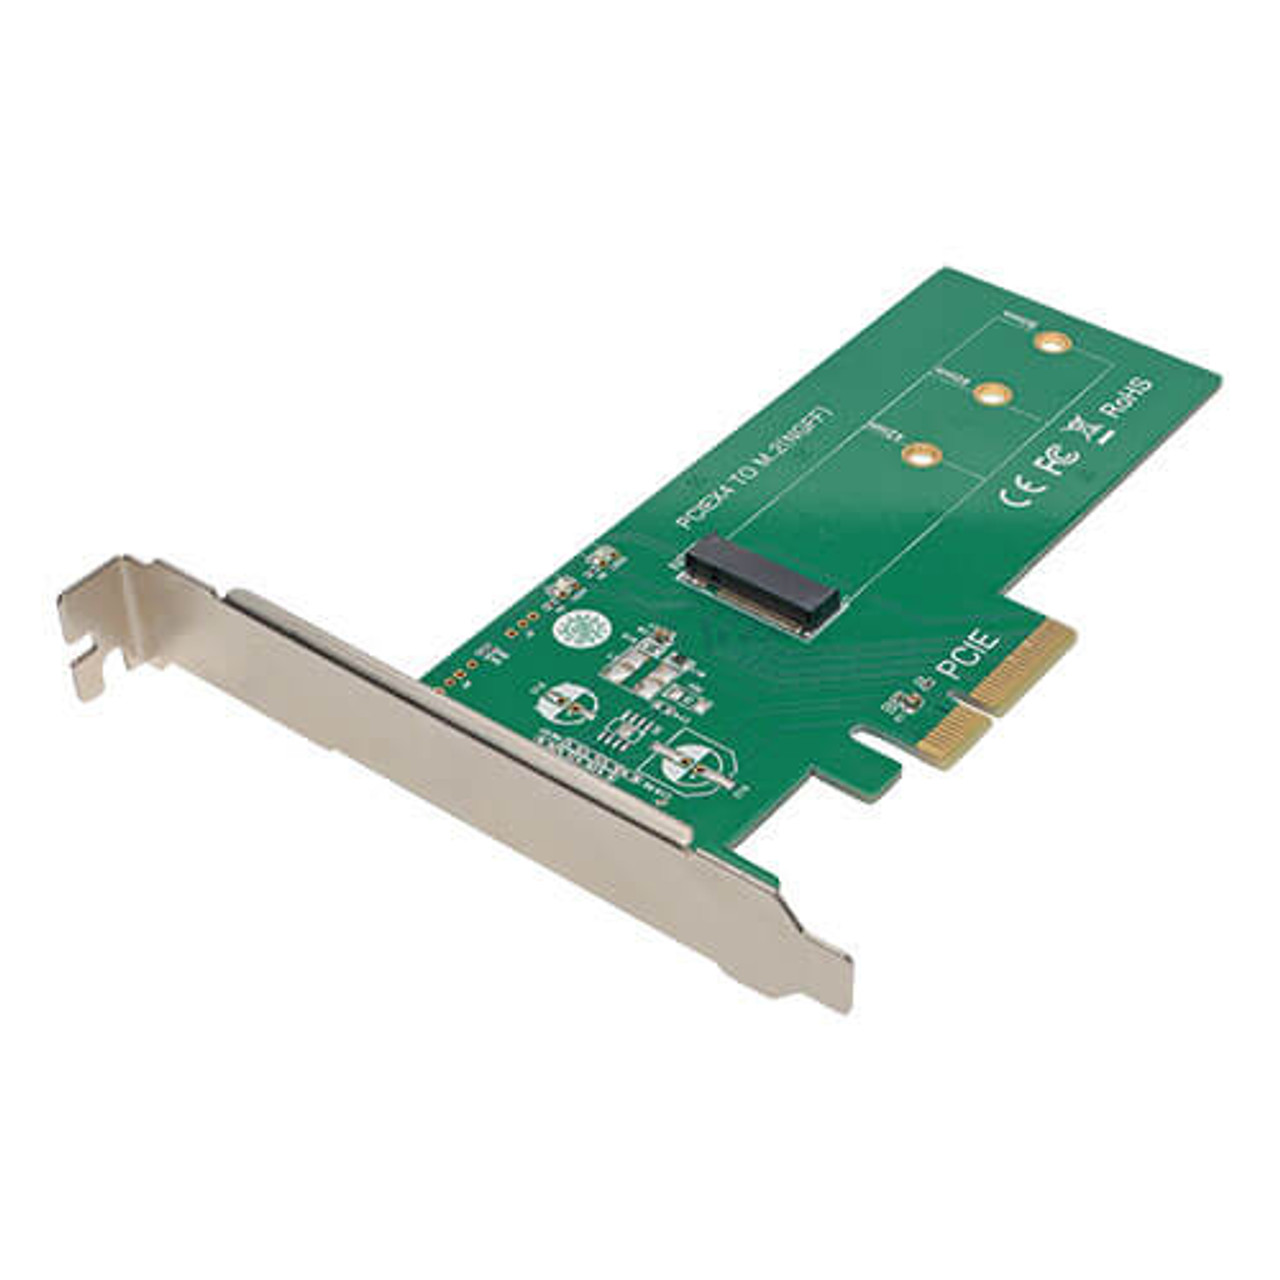 Tripp Lite USB C to M.2 NVMe SSD M Key Enclosure Adapter USB 3.1